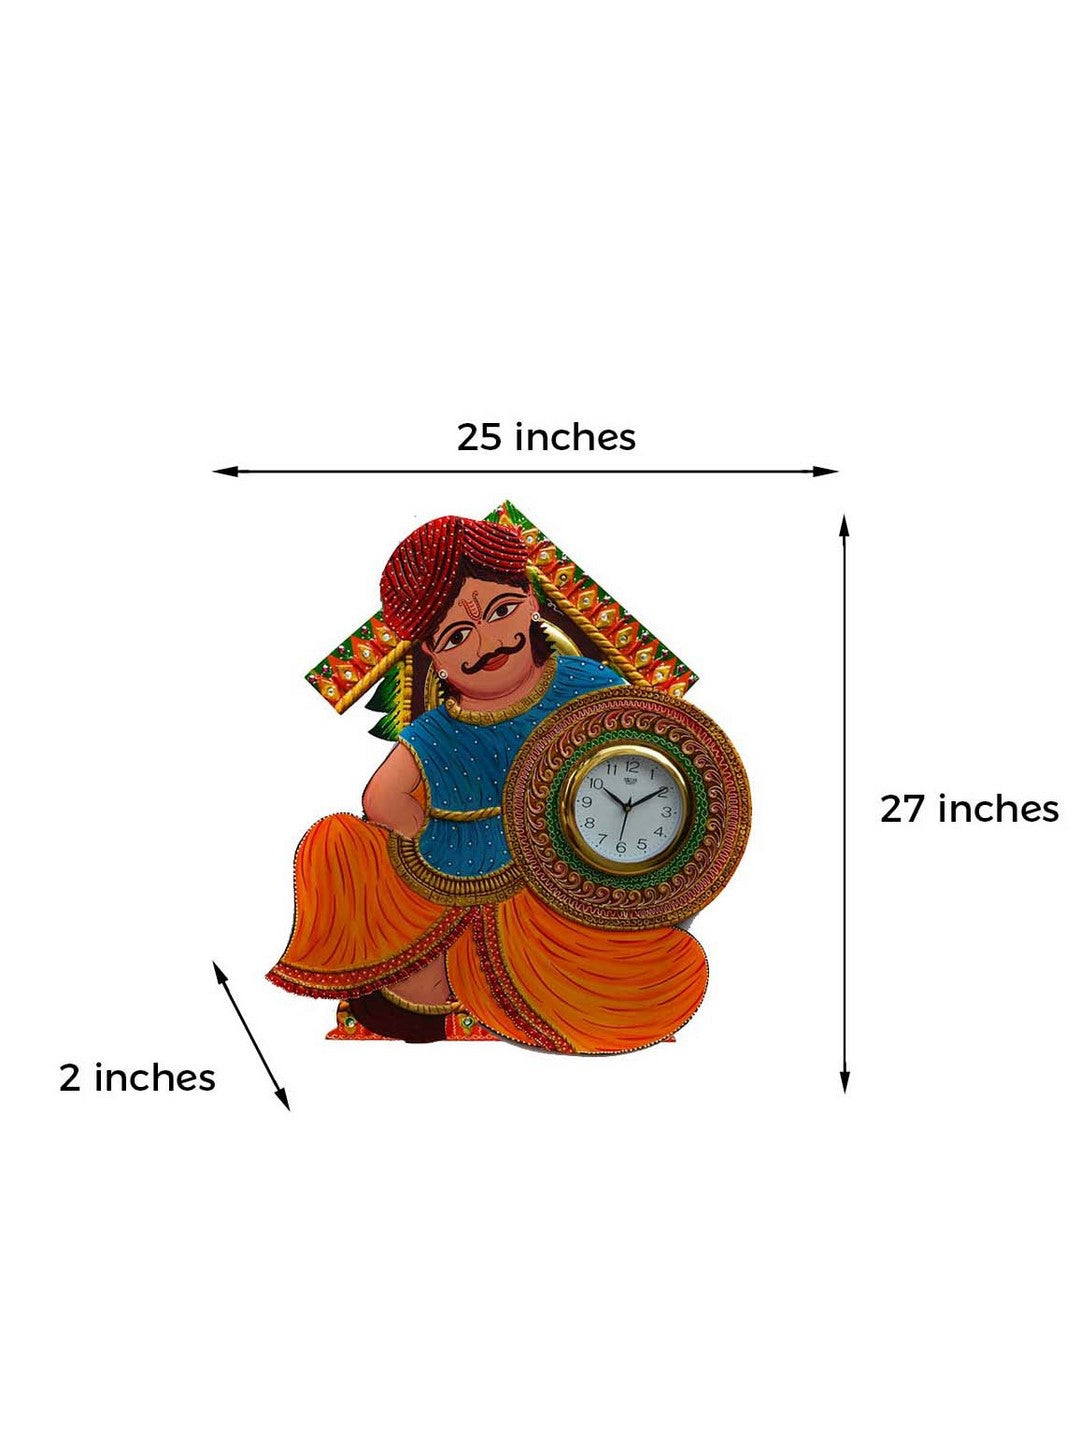 Papier-Mache Rajasthani Turban Man Handcrafted Wall Clock 2